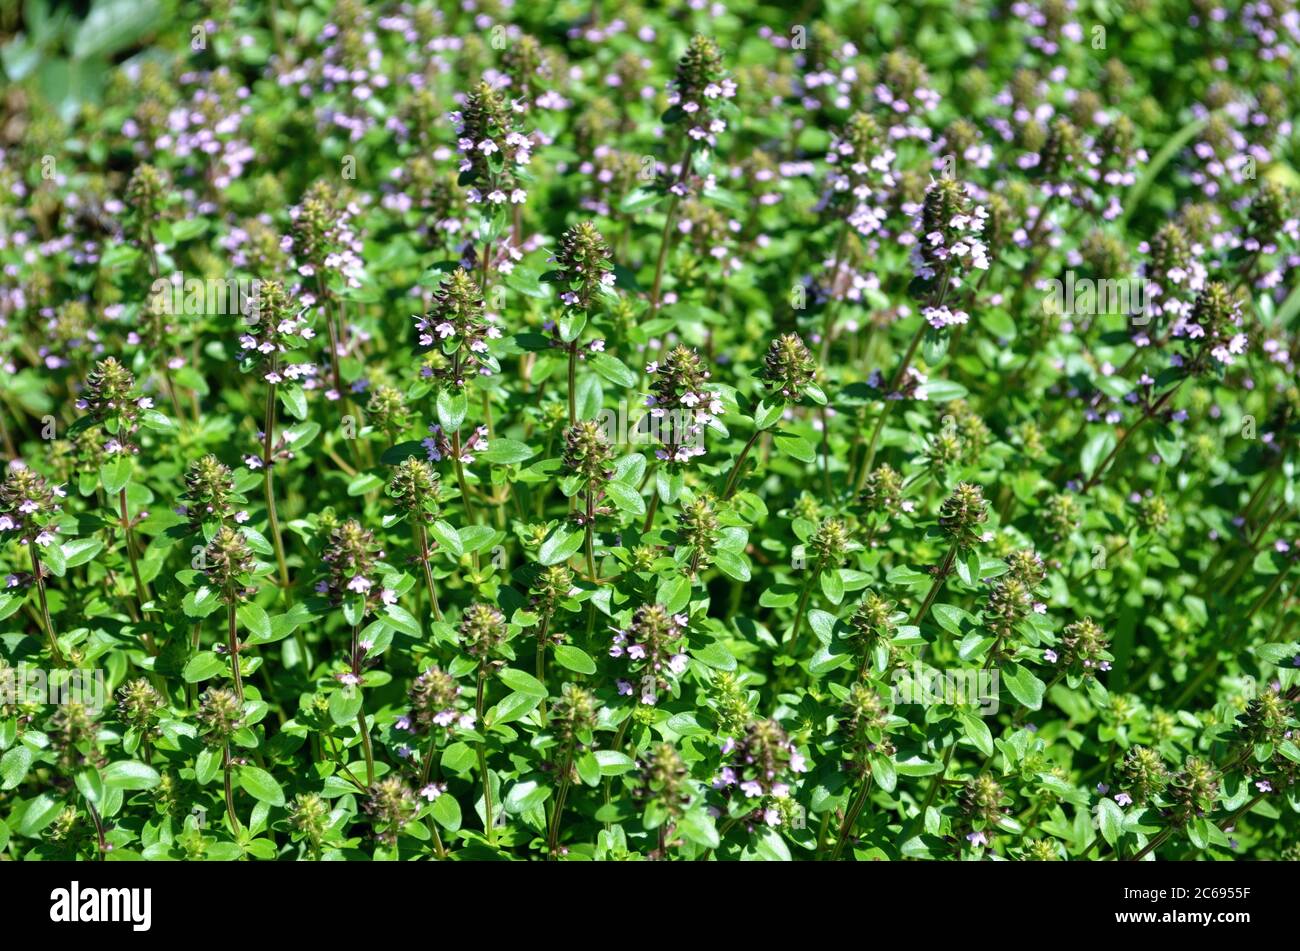 Thyme herb growing in garden. Thymus vulgaris Stock Photo